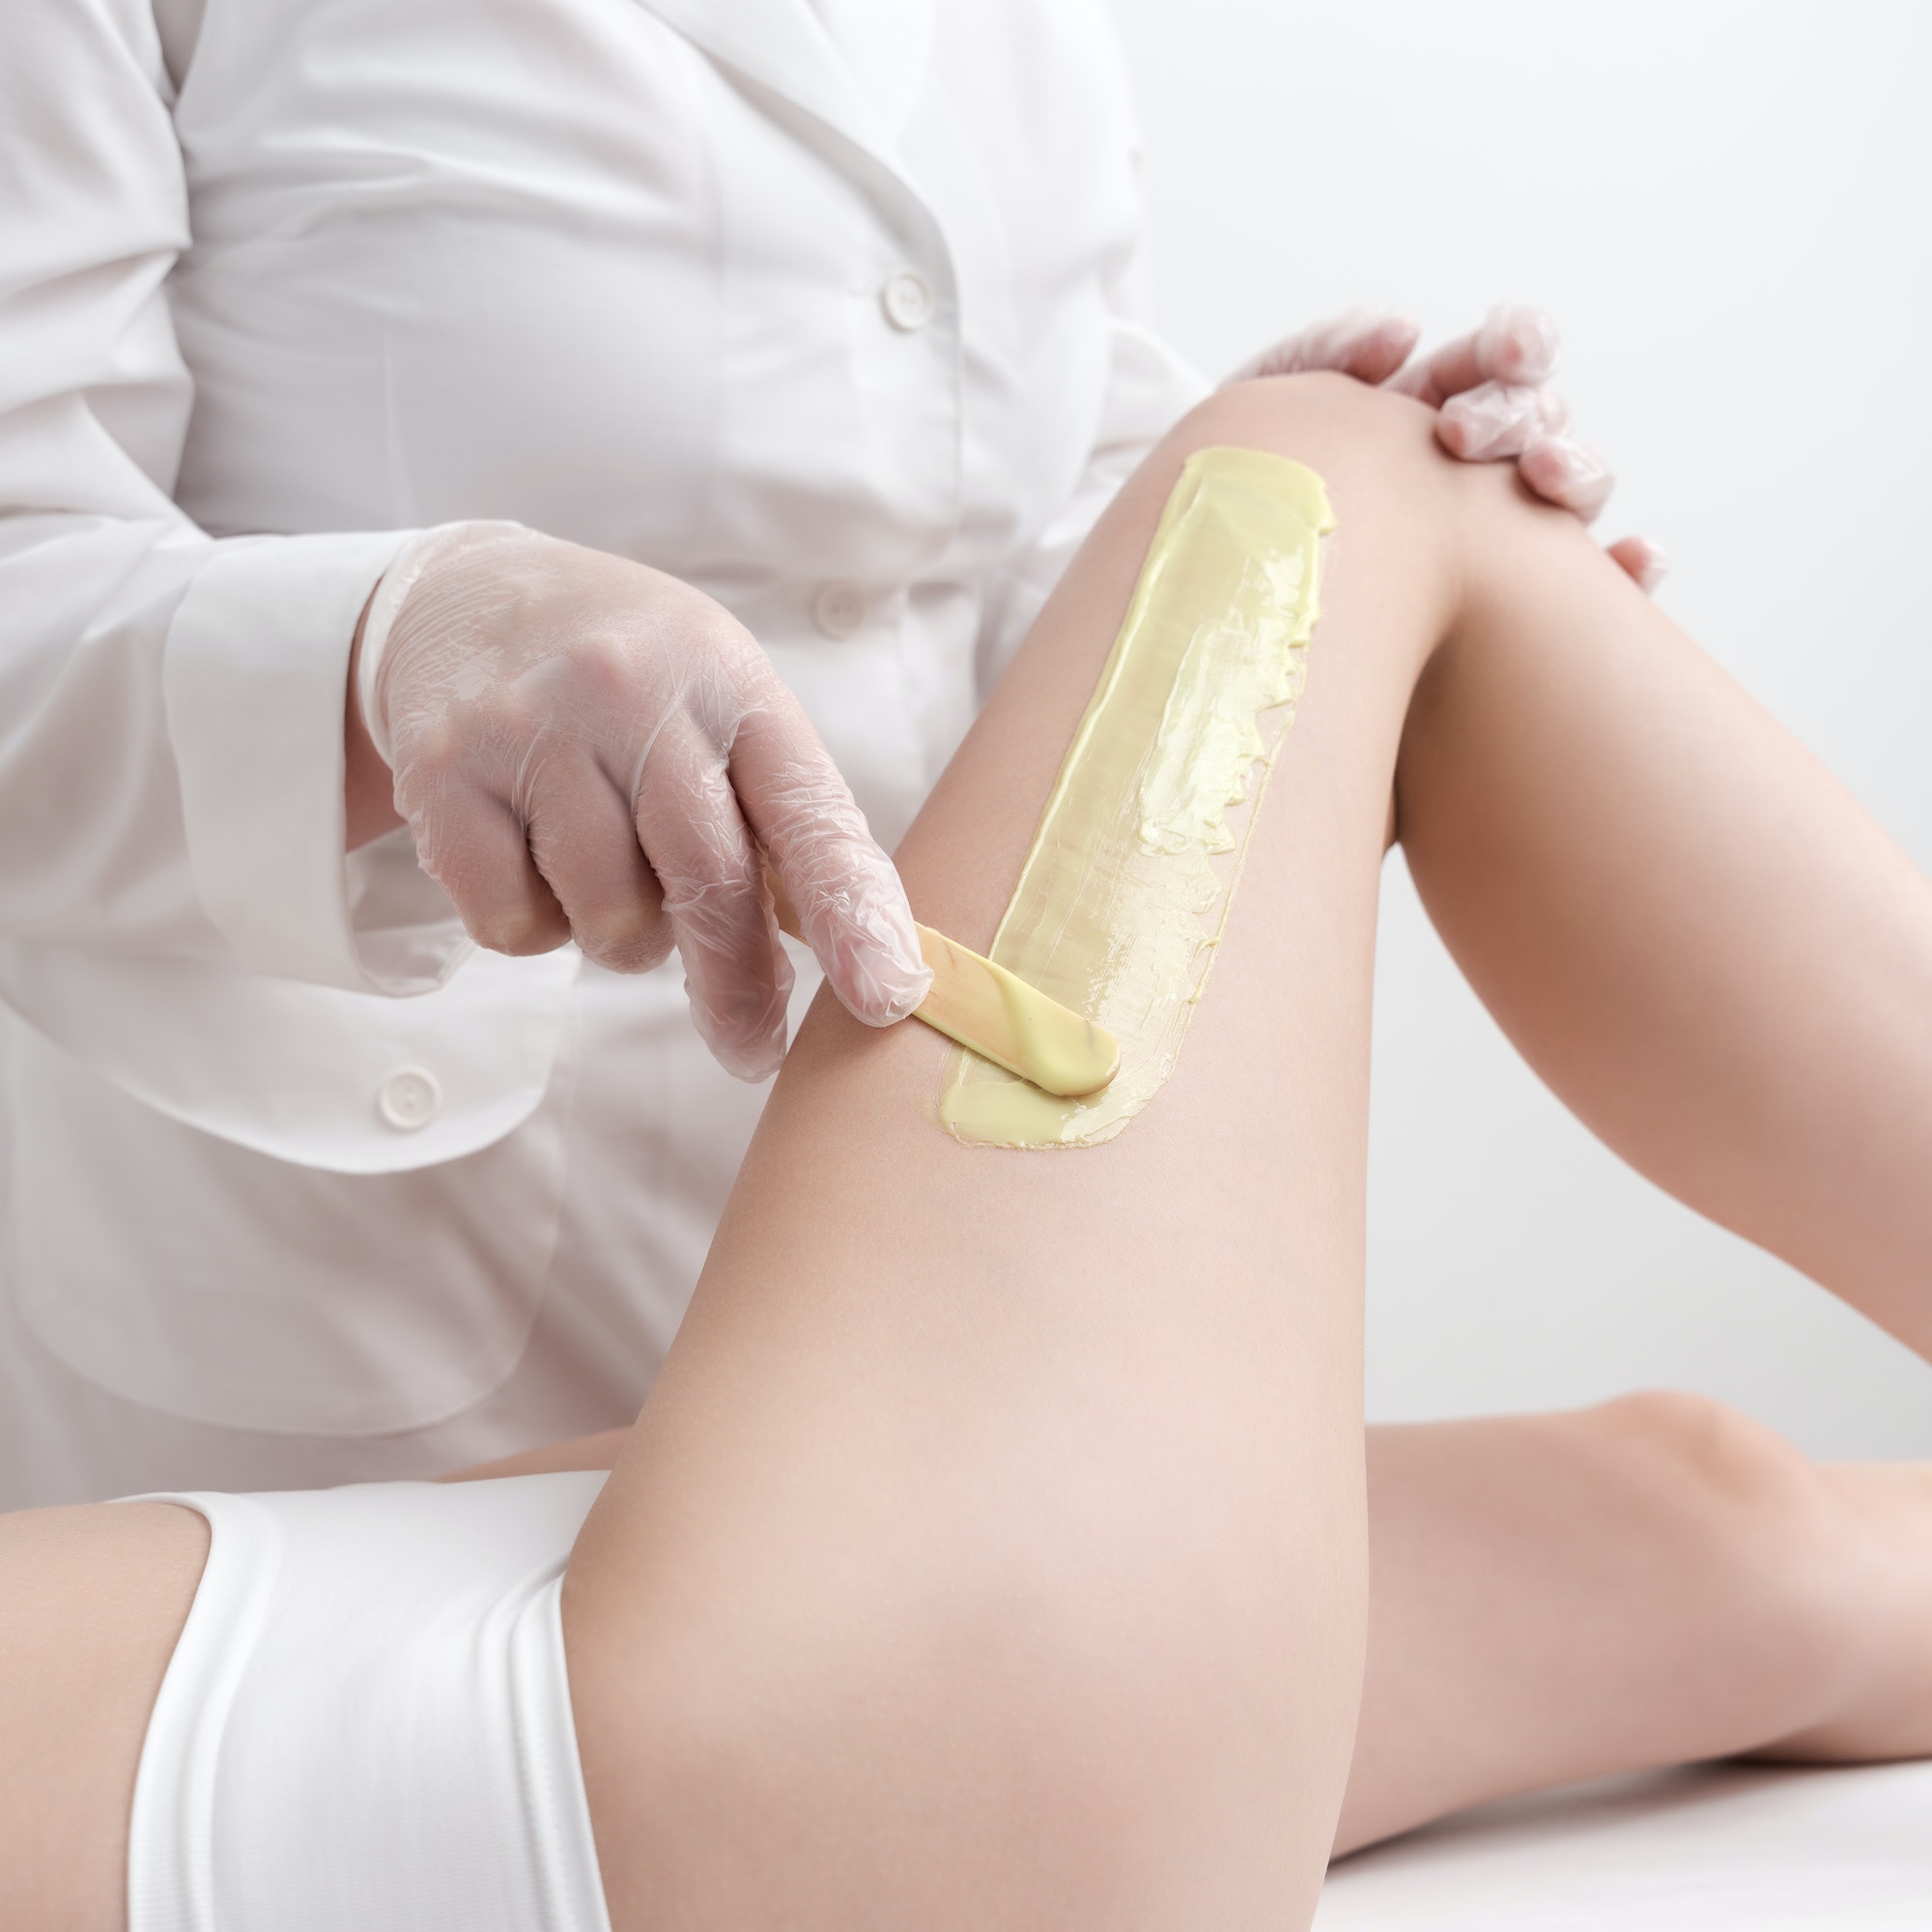 Waxing procedure - applying green hot wax on skin leg using spatula while woman lying down on couch